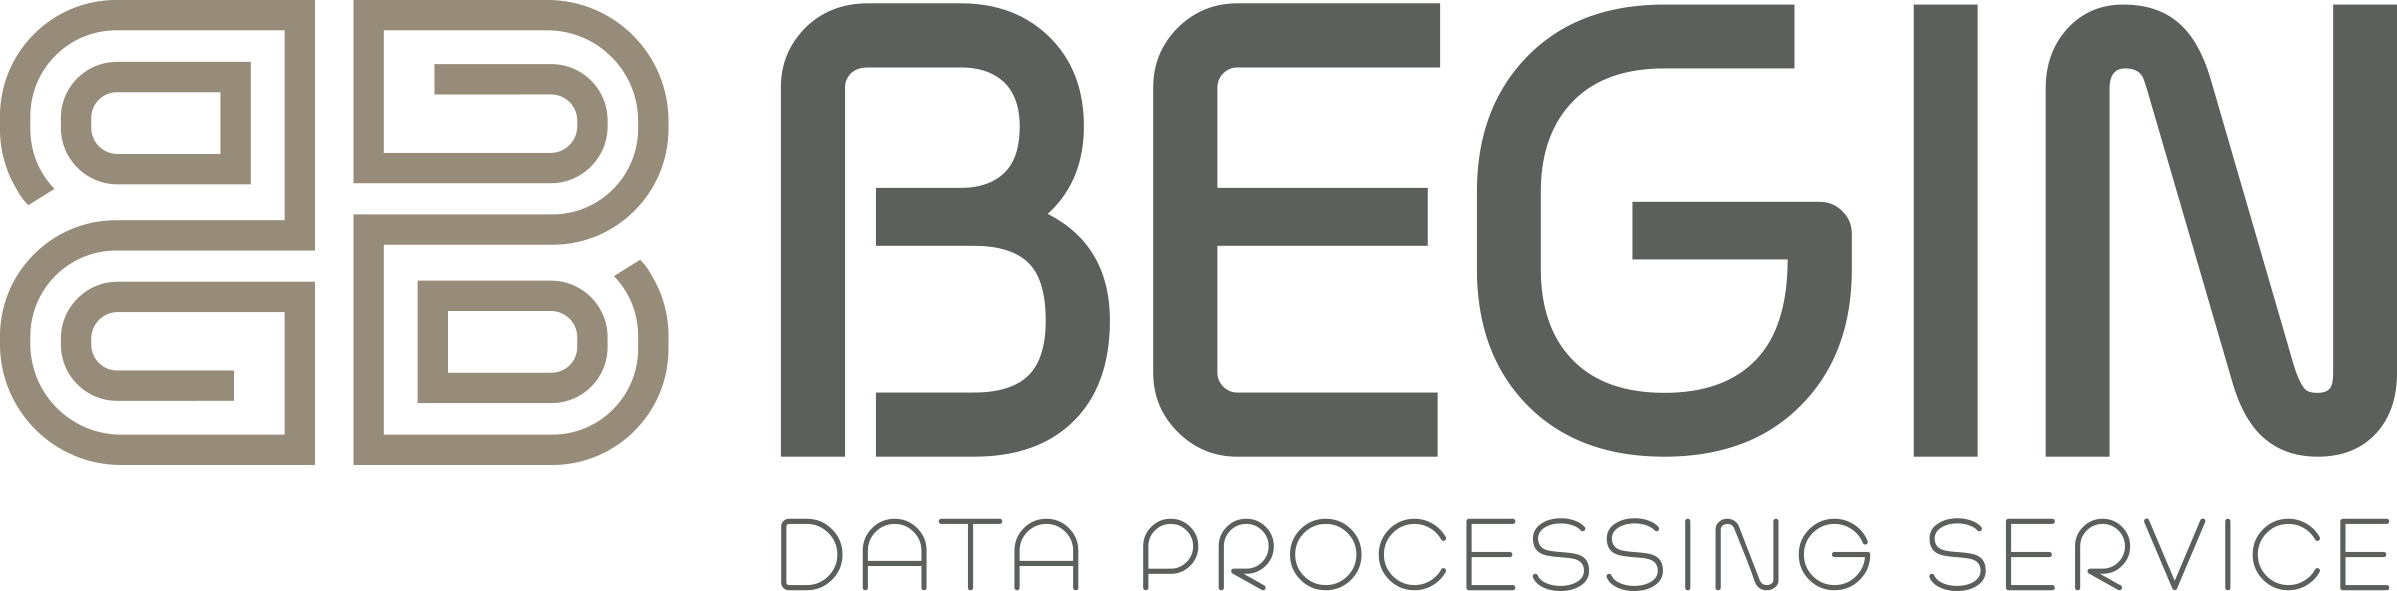 BEGIN - Data Processing Service